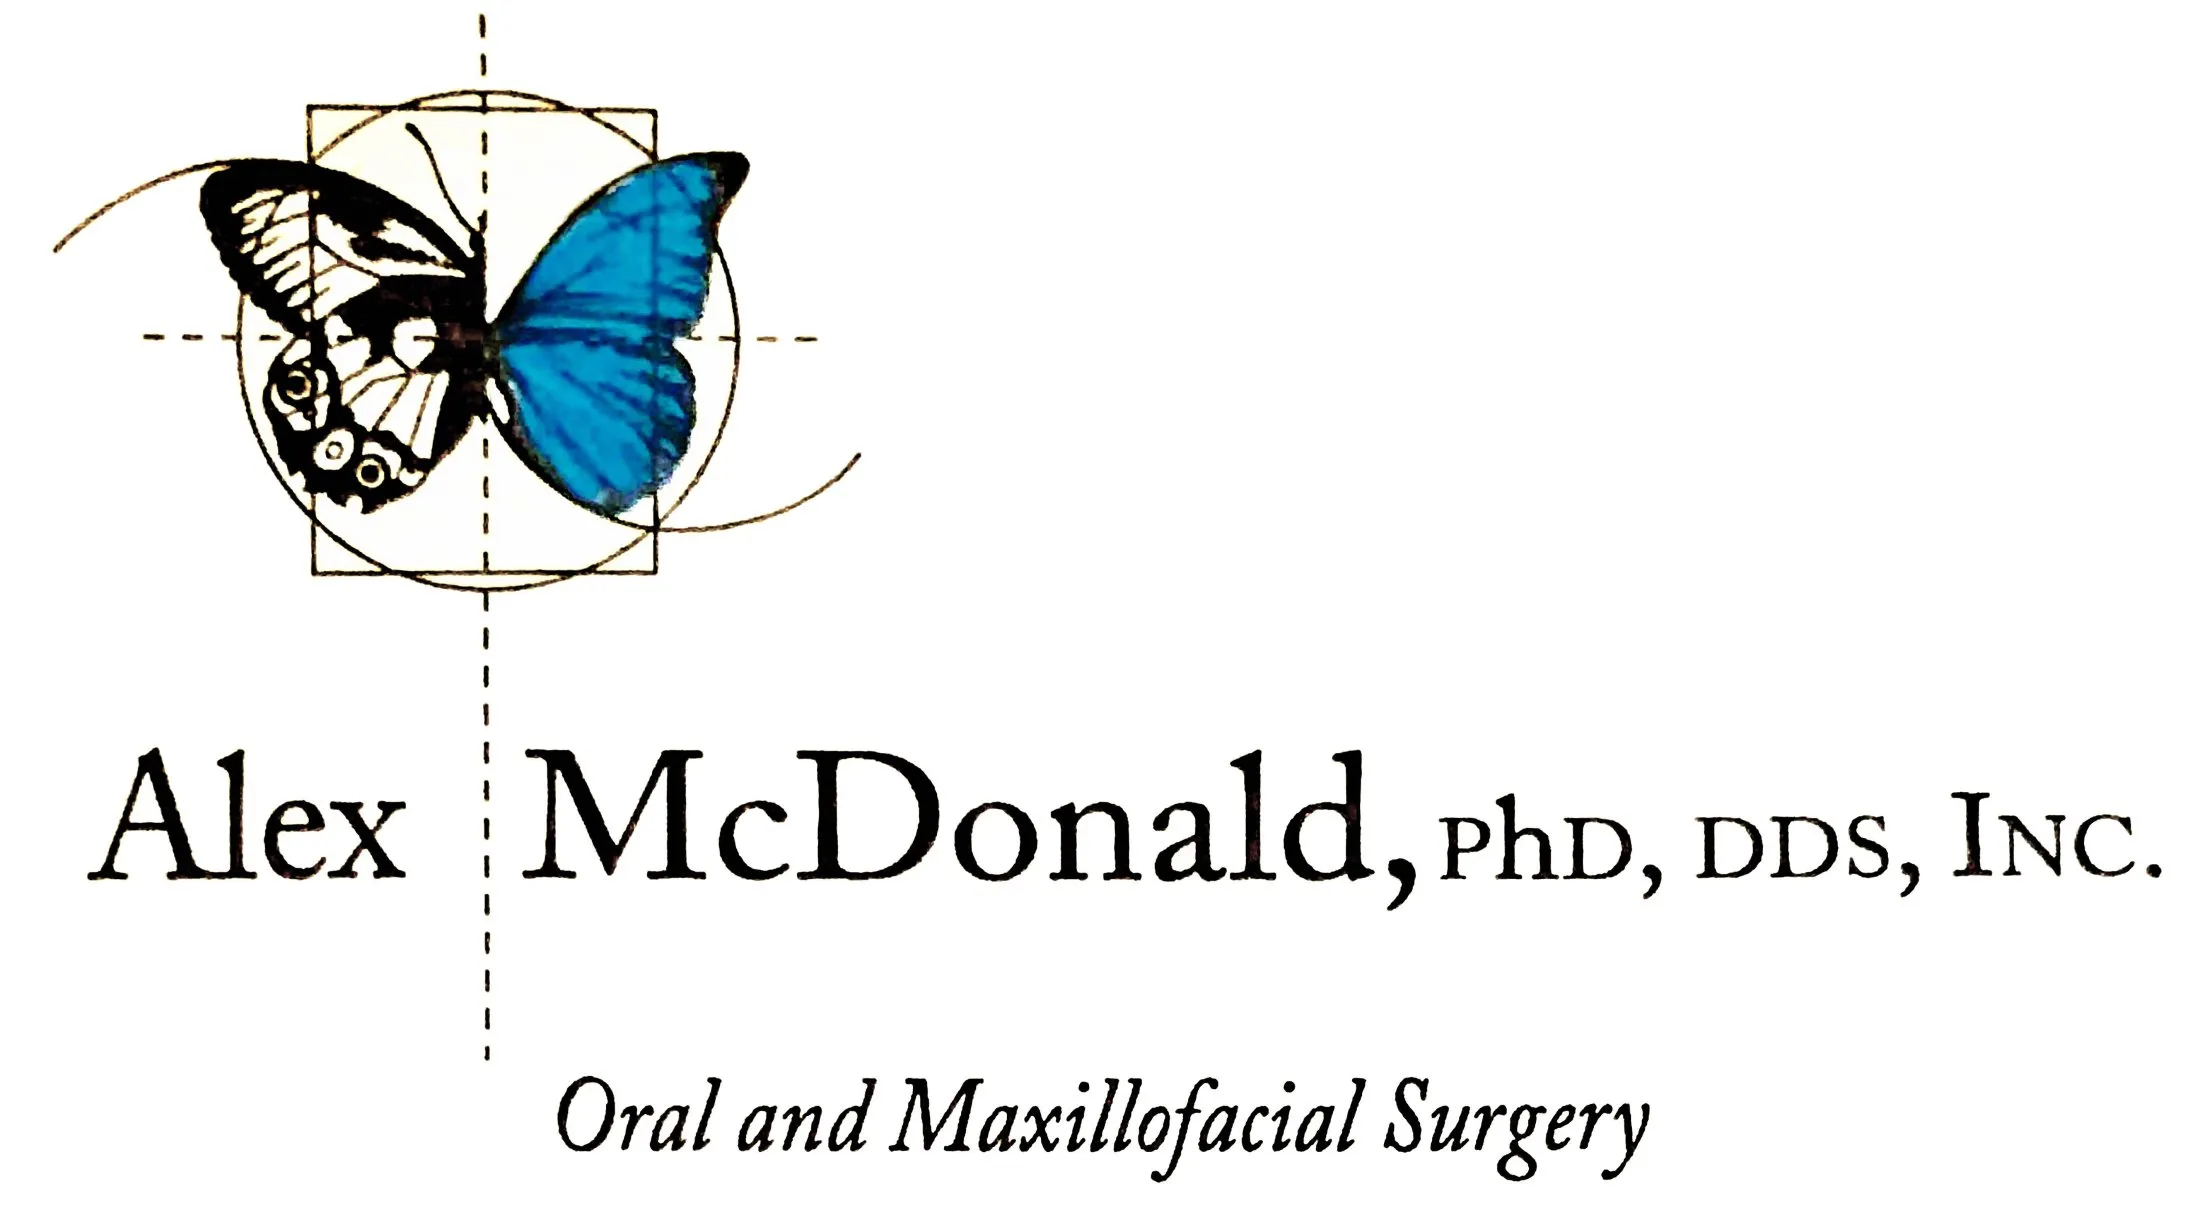 Alex R. McDonald, PhD, DDS, Inc.